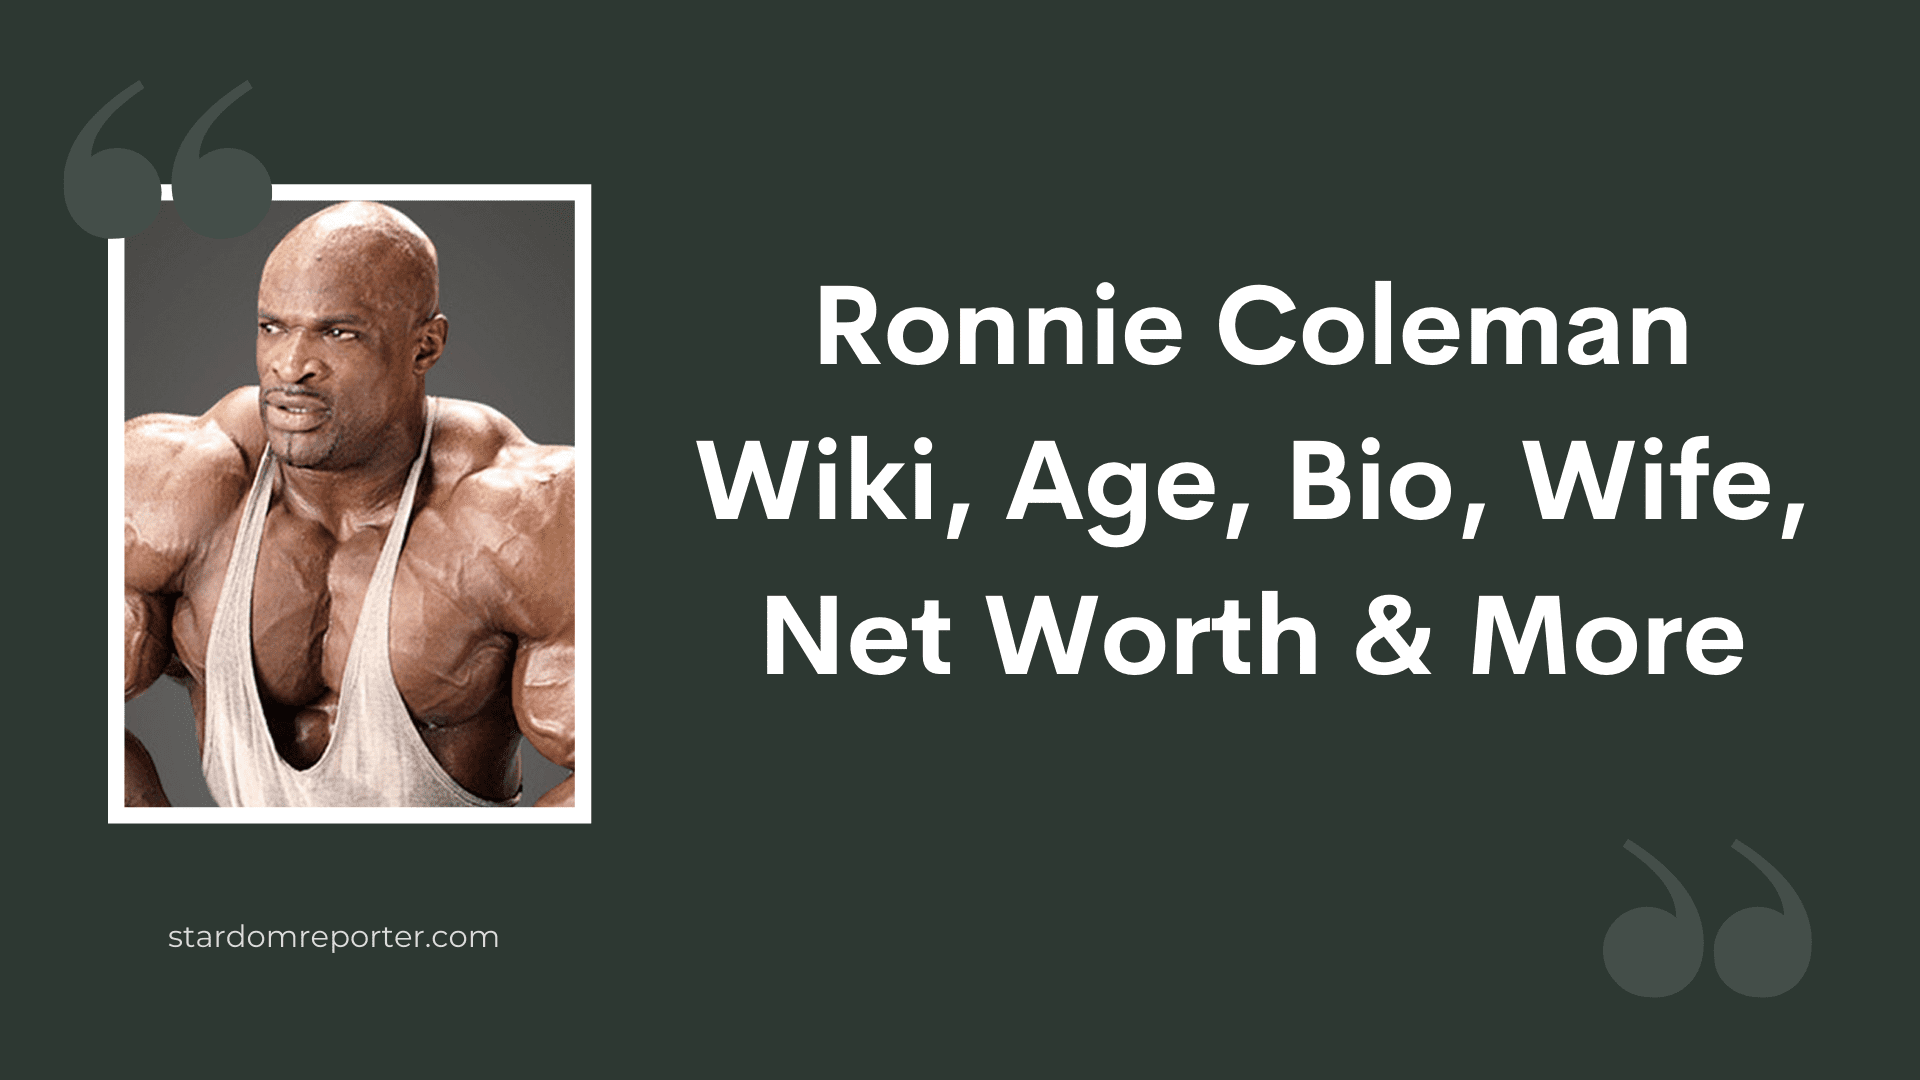 Ronnie Coleman Wiki, Age, Bio, Wife, Net Worth & More - 31